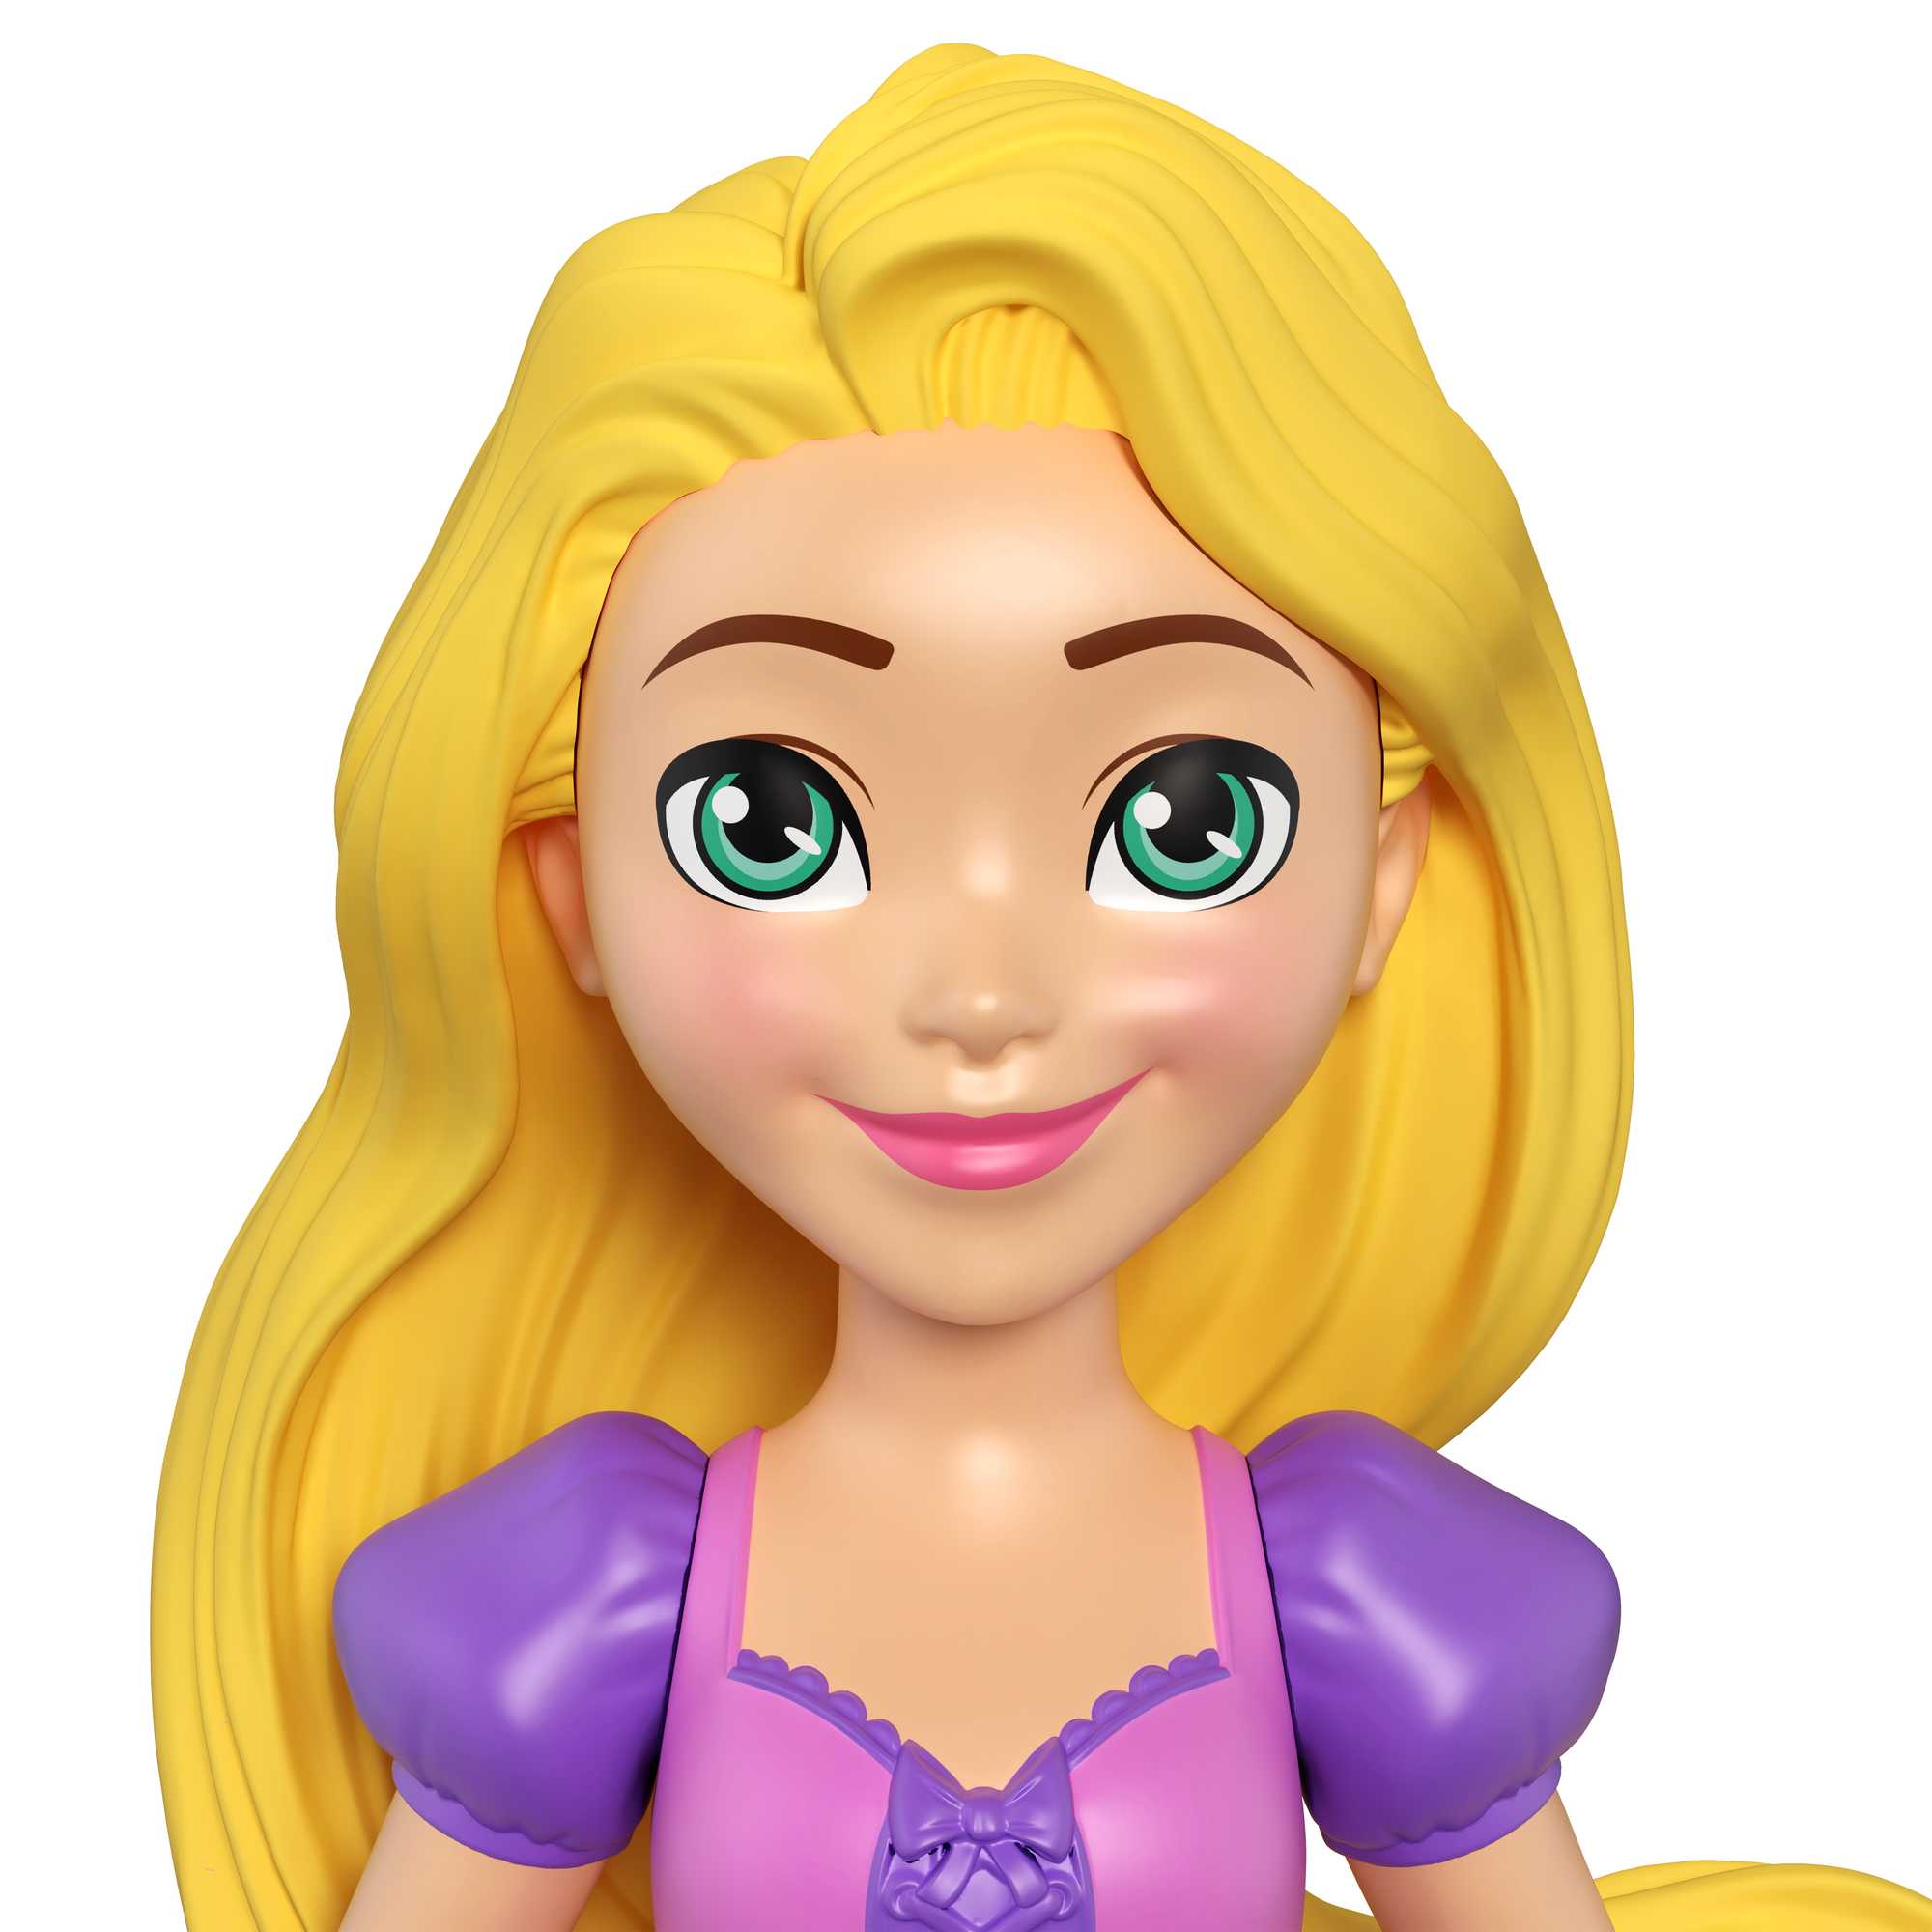 Disney Princess Rapunzel en Maximus 0194735121113